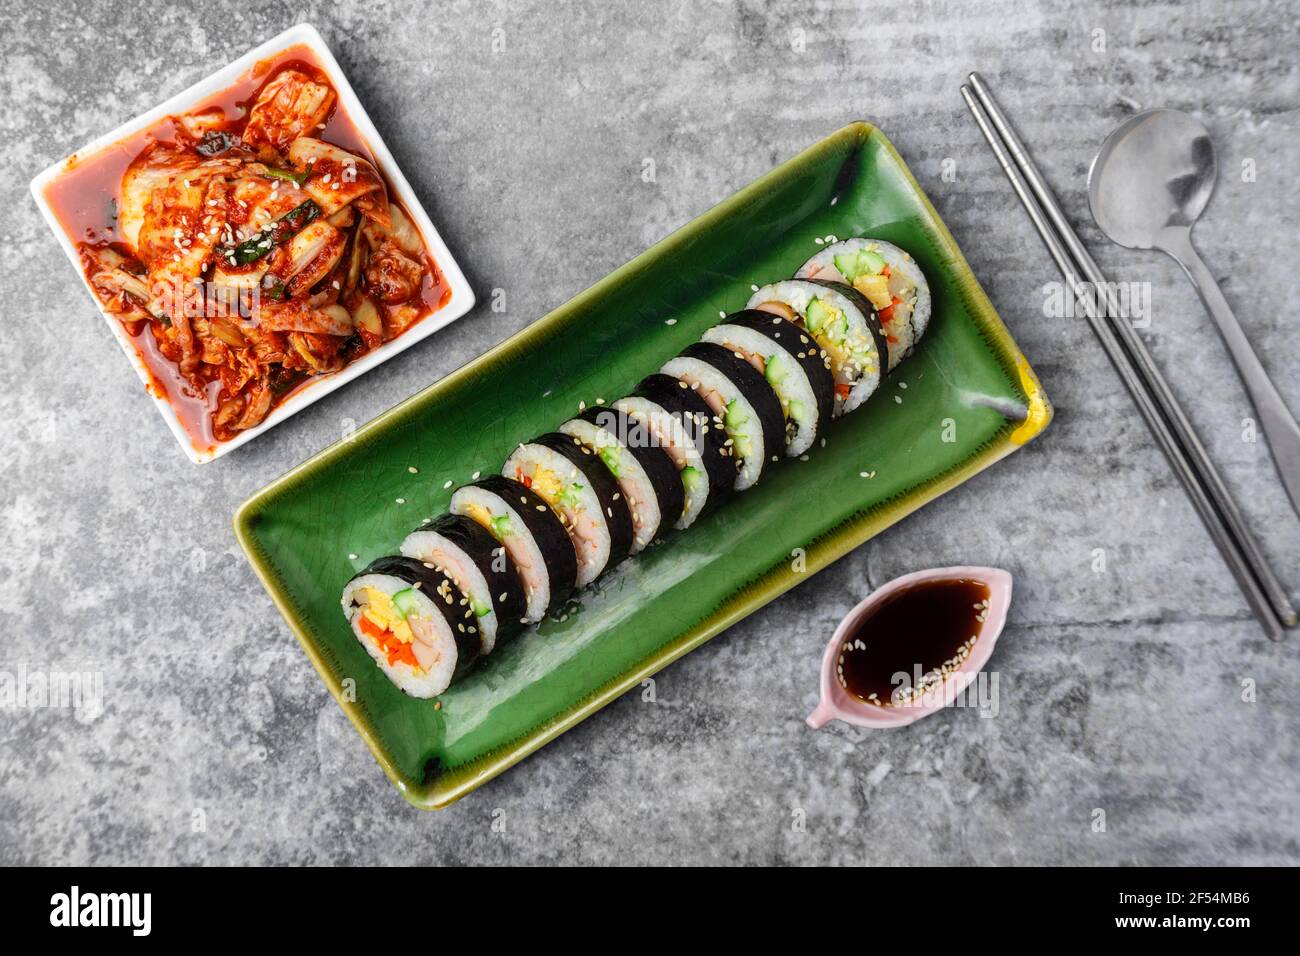 Korean food, Gimbap or Kimbap is seaweed rice roll and kimchi side dish. Stock Photo